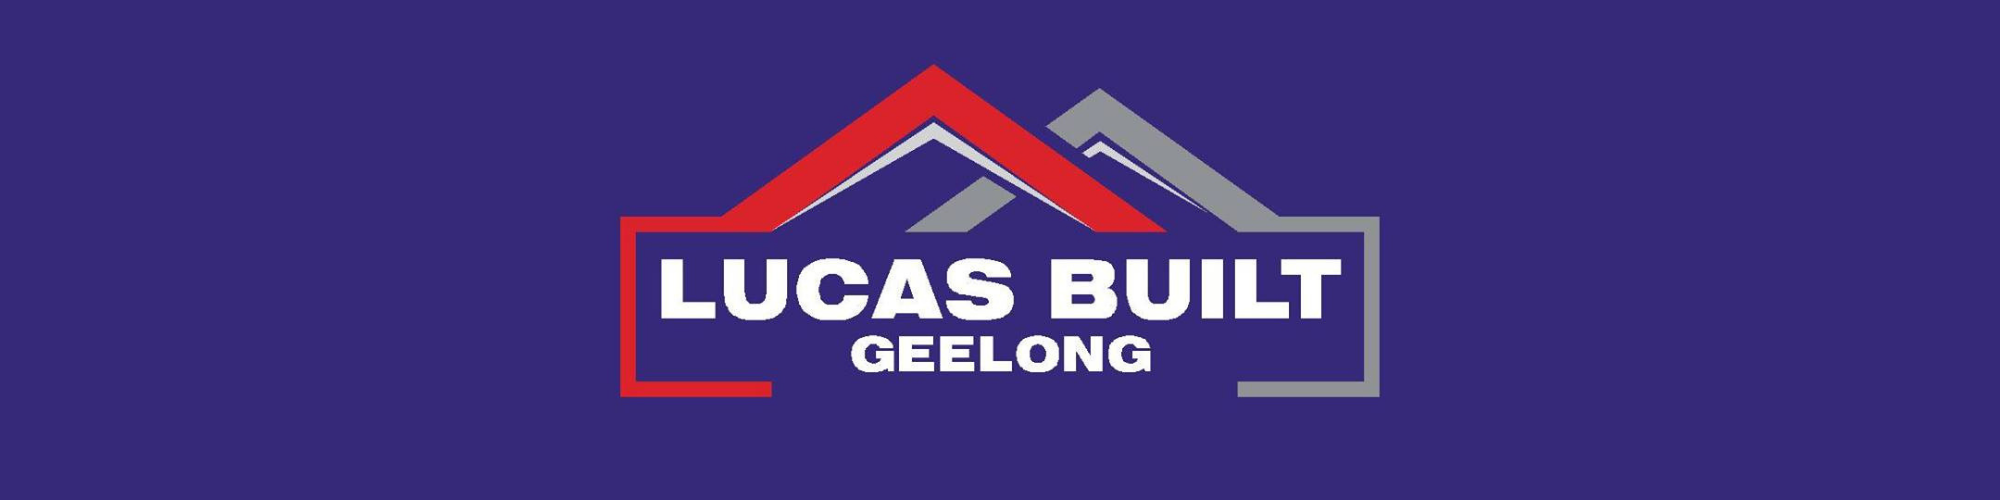 Matthew Lucas of Lucas Built Geelong is making waves in the building industry throughout Geelong